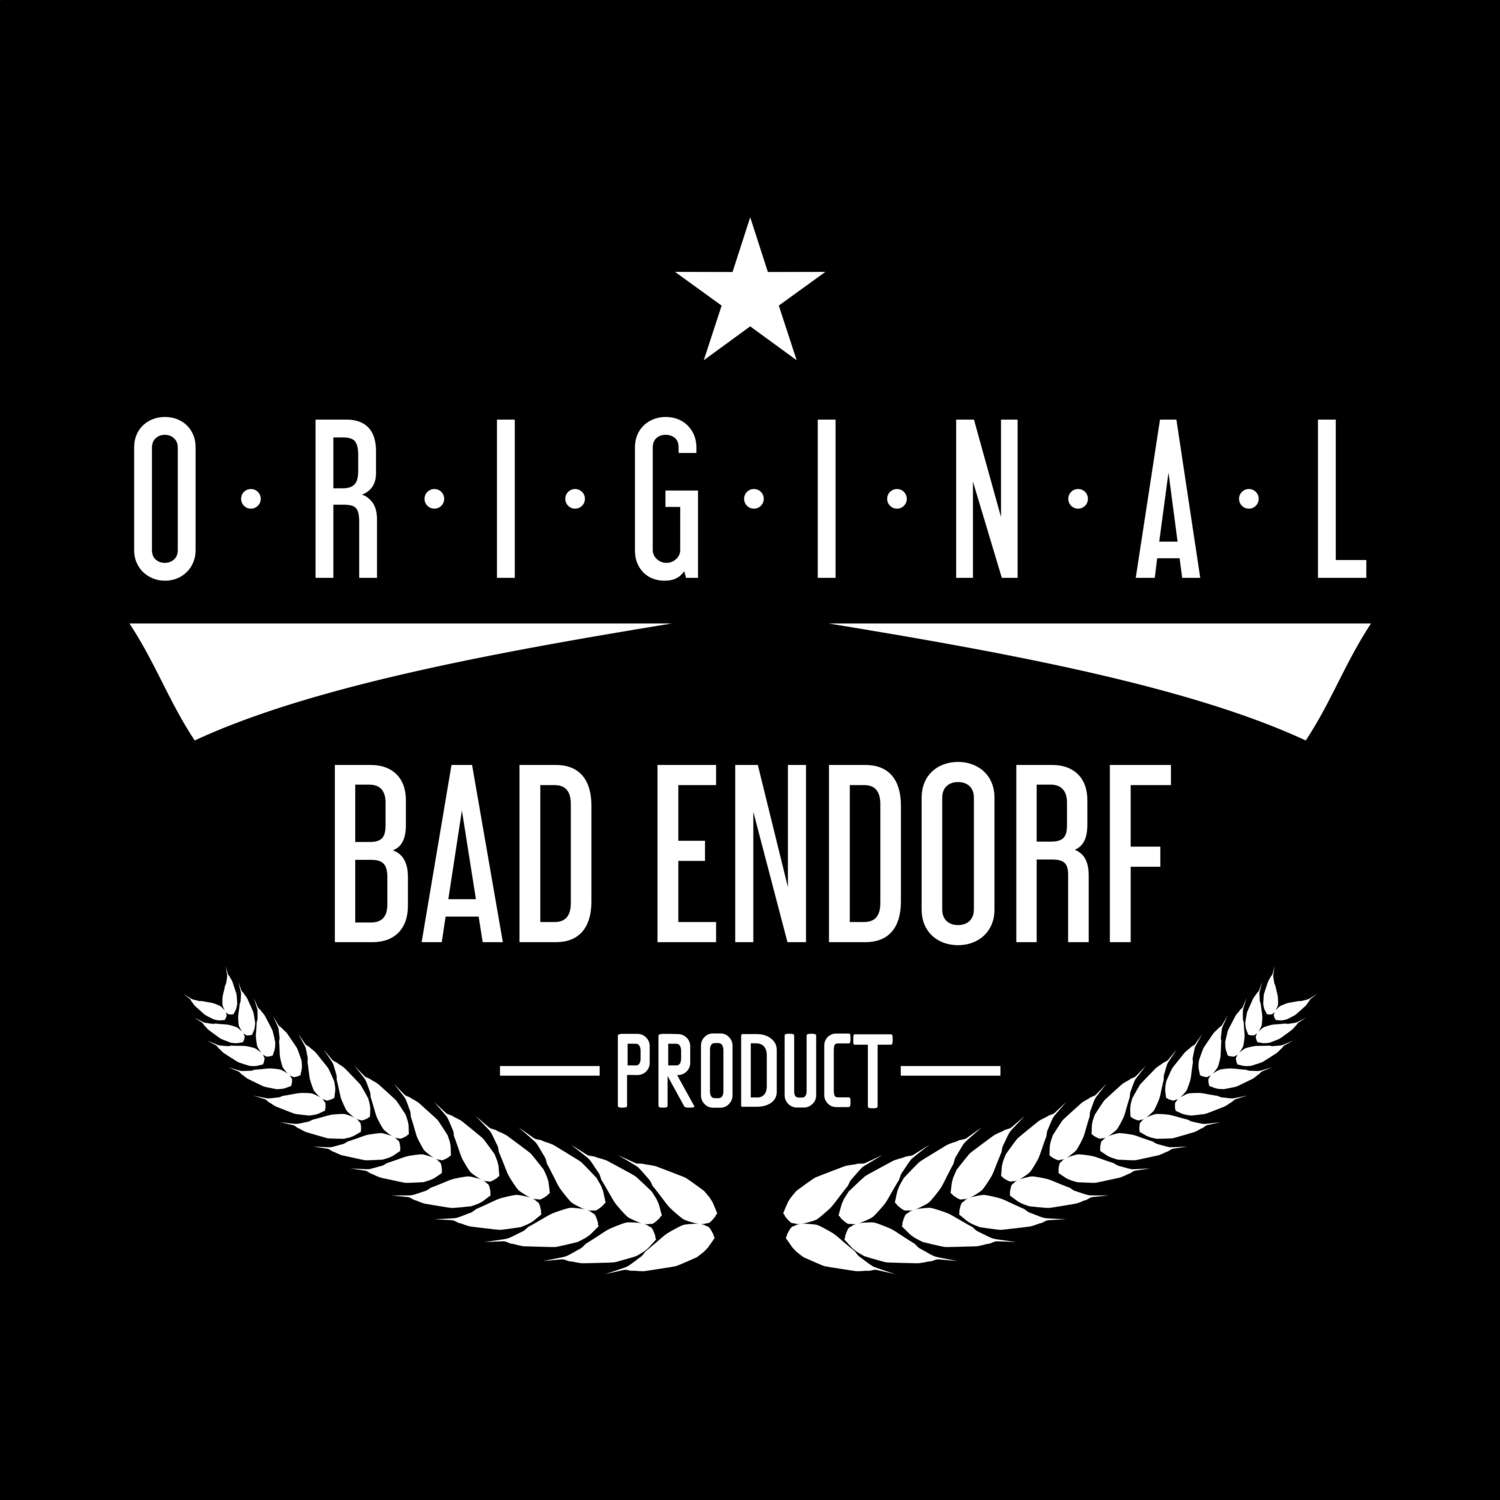 Bad Endorf T-Shirt »Original Product«